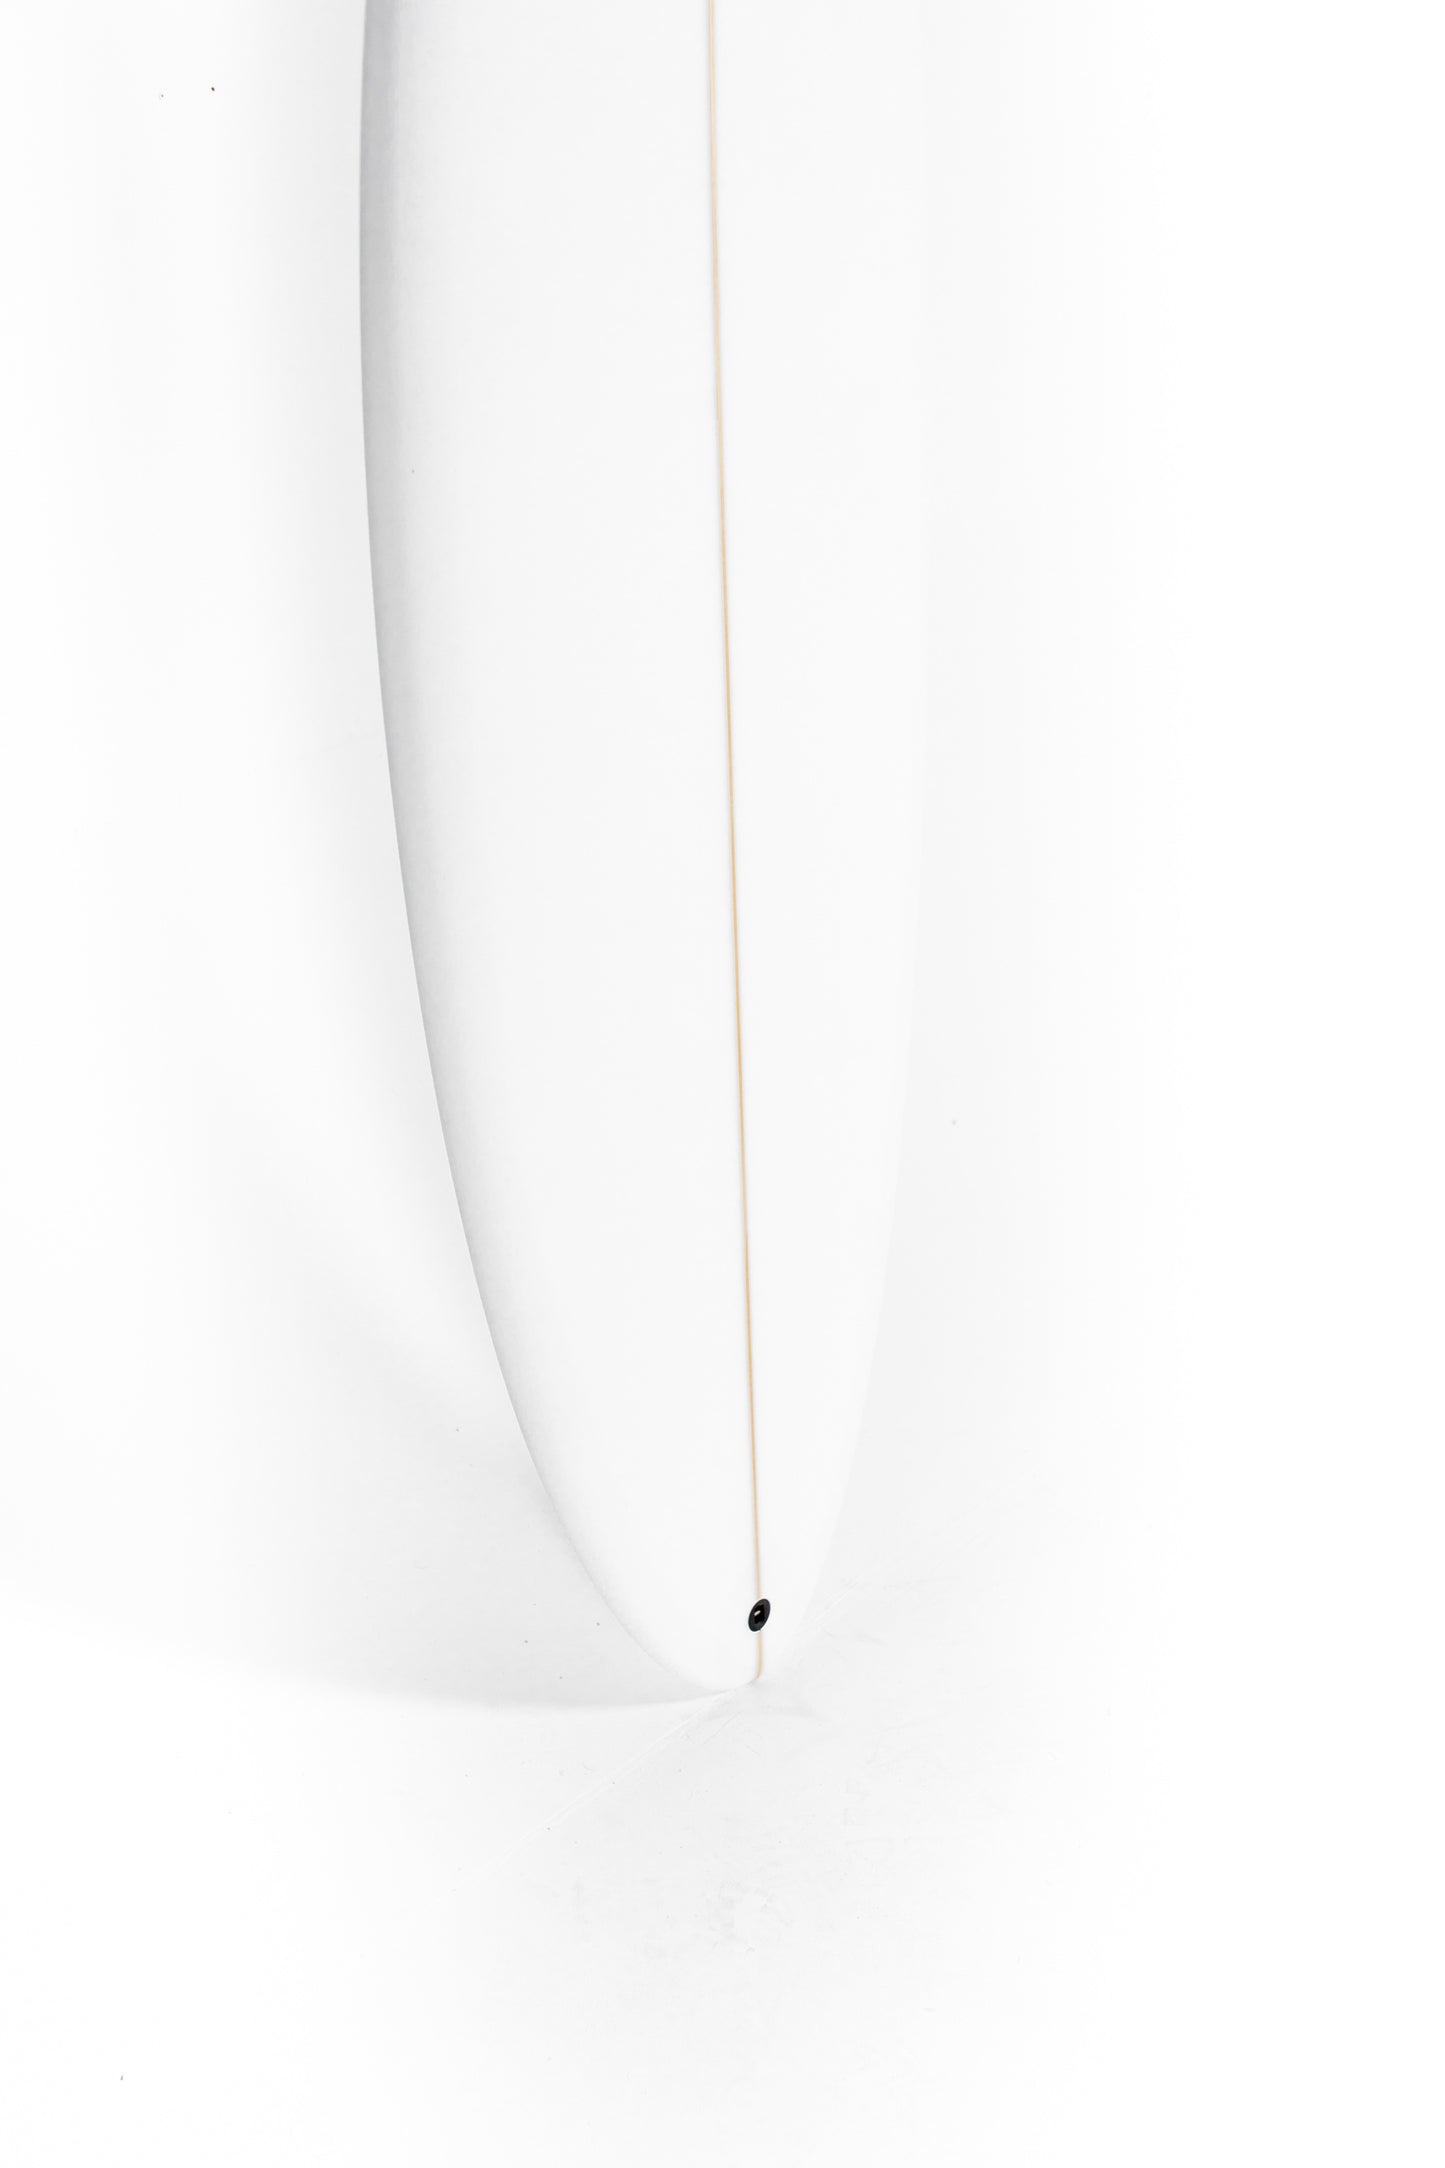 
                  
                    Pukas-Surf-Shop-Kream-Surfboards-Ellipse
                  
                